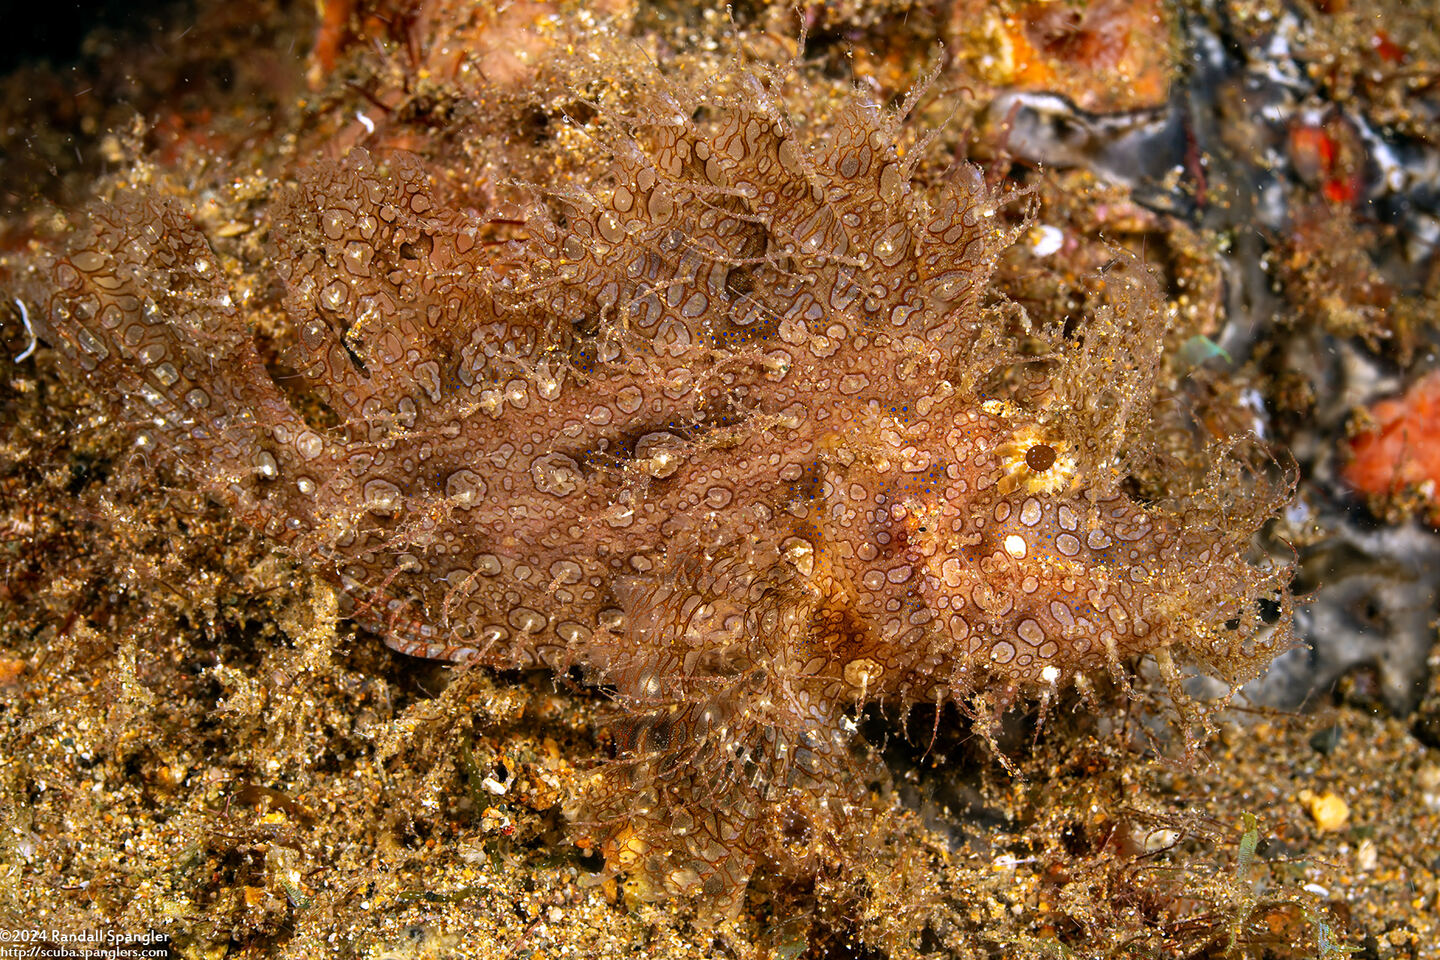 Rhinopias frondosa (Weedy Scorpionfish)